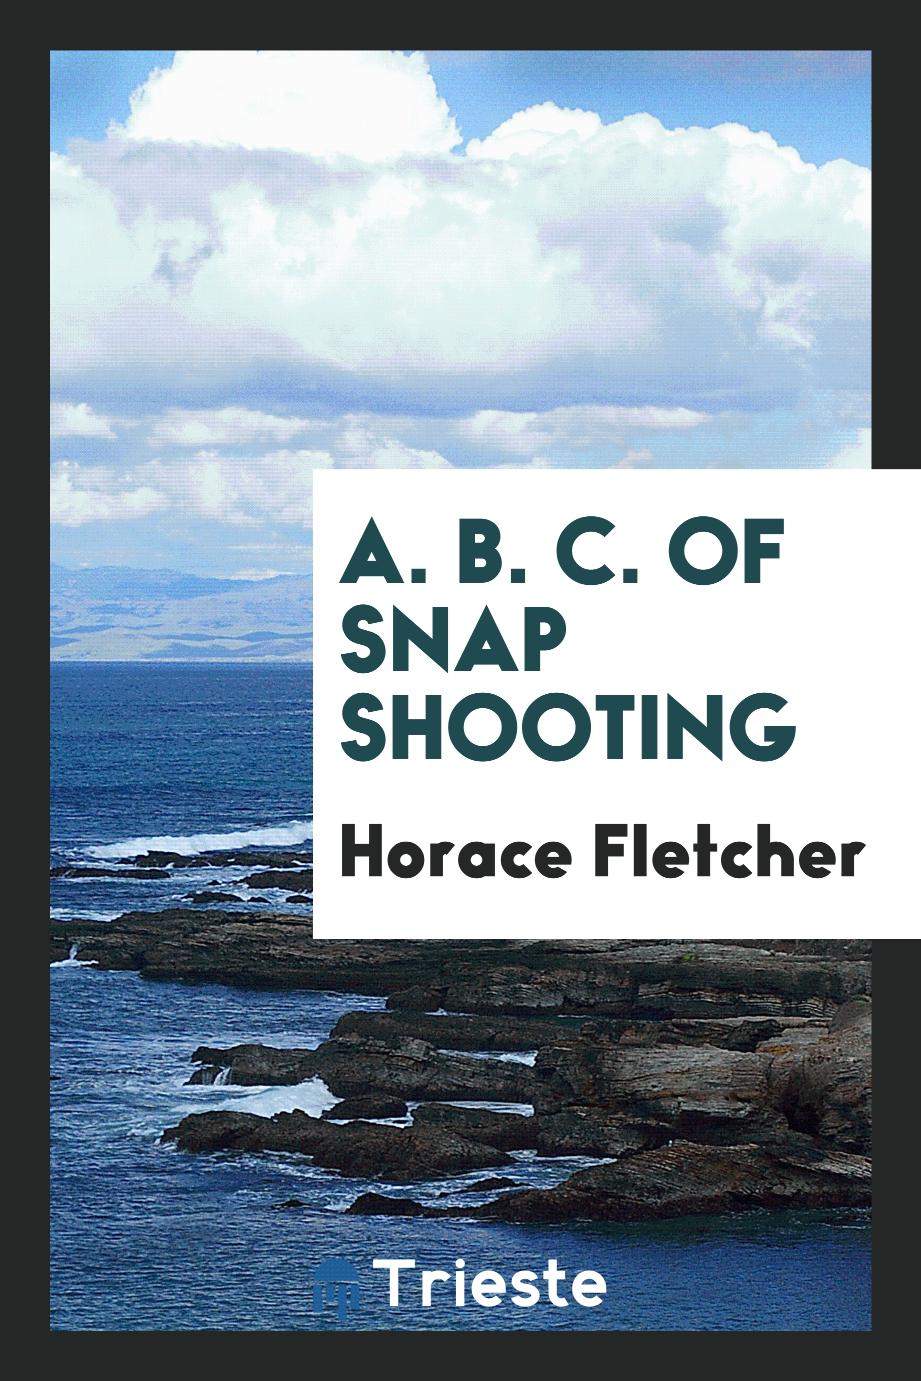 A. B. C. of snap shooting